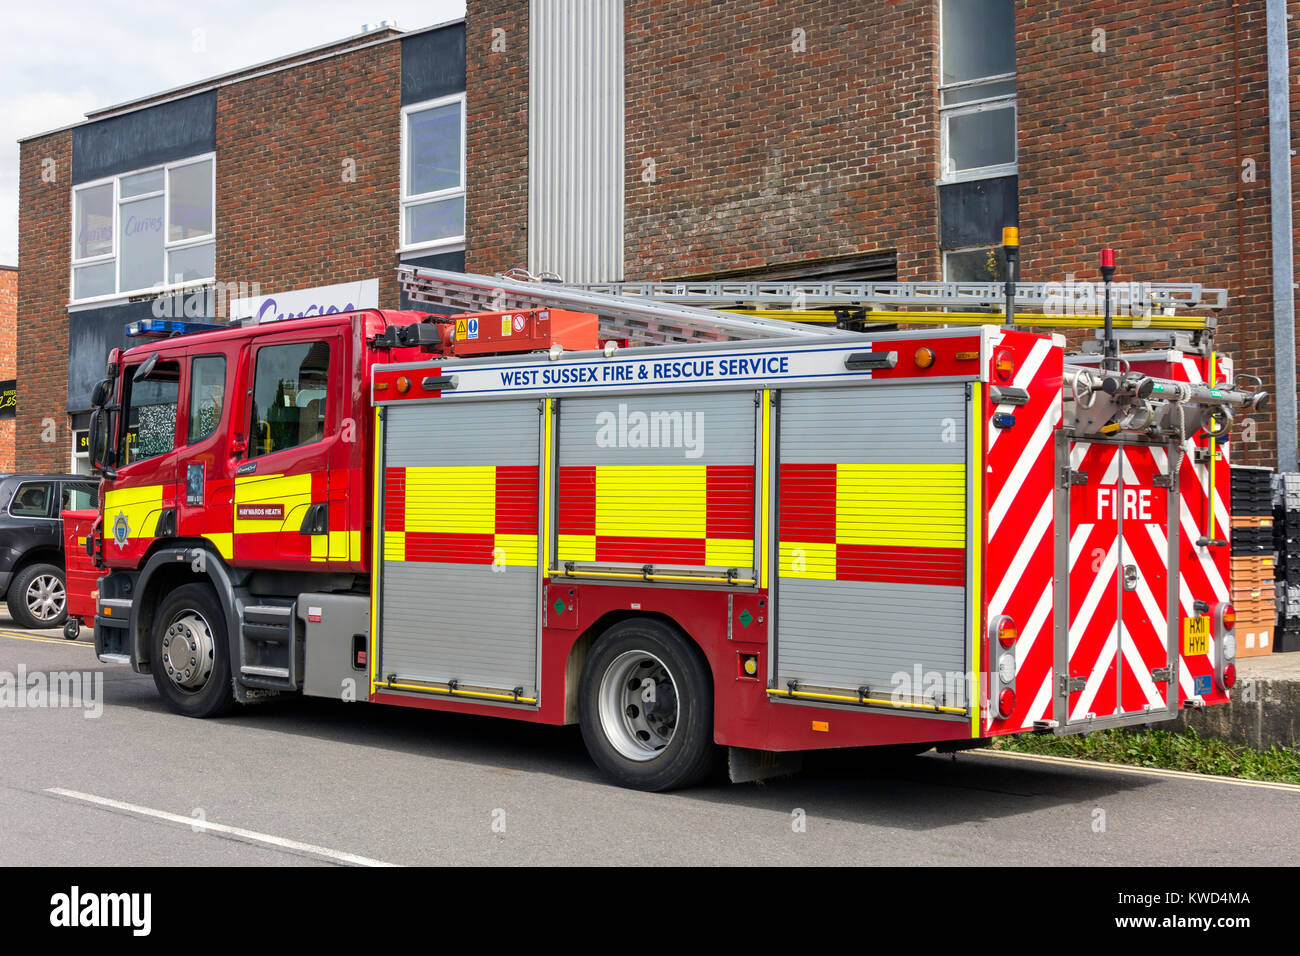 West Sussex Fire & Rescue Service engine, Haywards Heath, West Sussex, England, United Kingdom Stock Photo